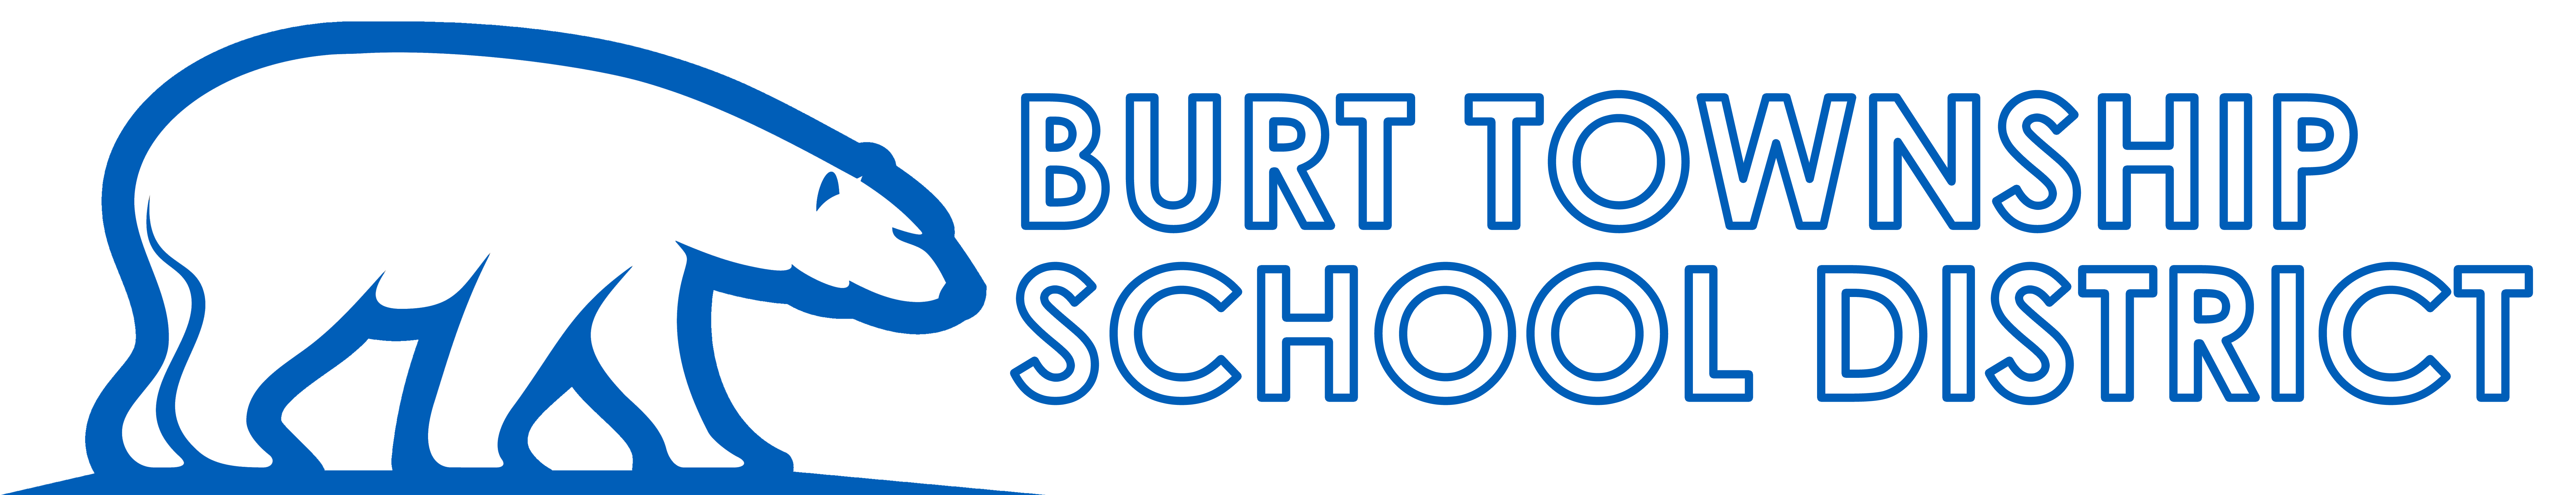 Burt Township School District